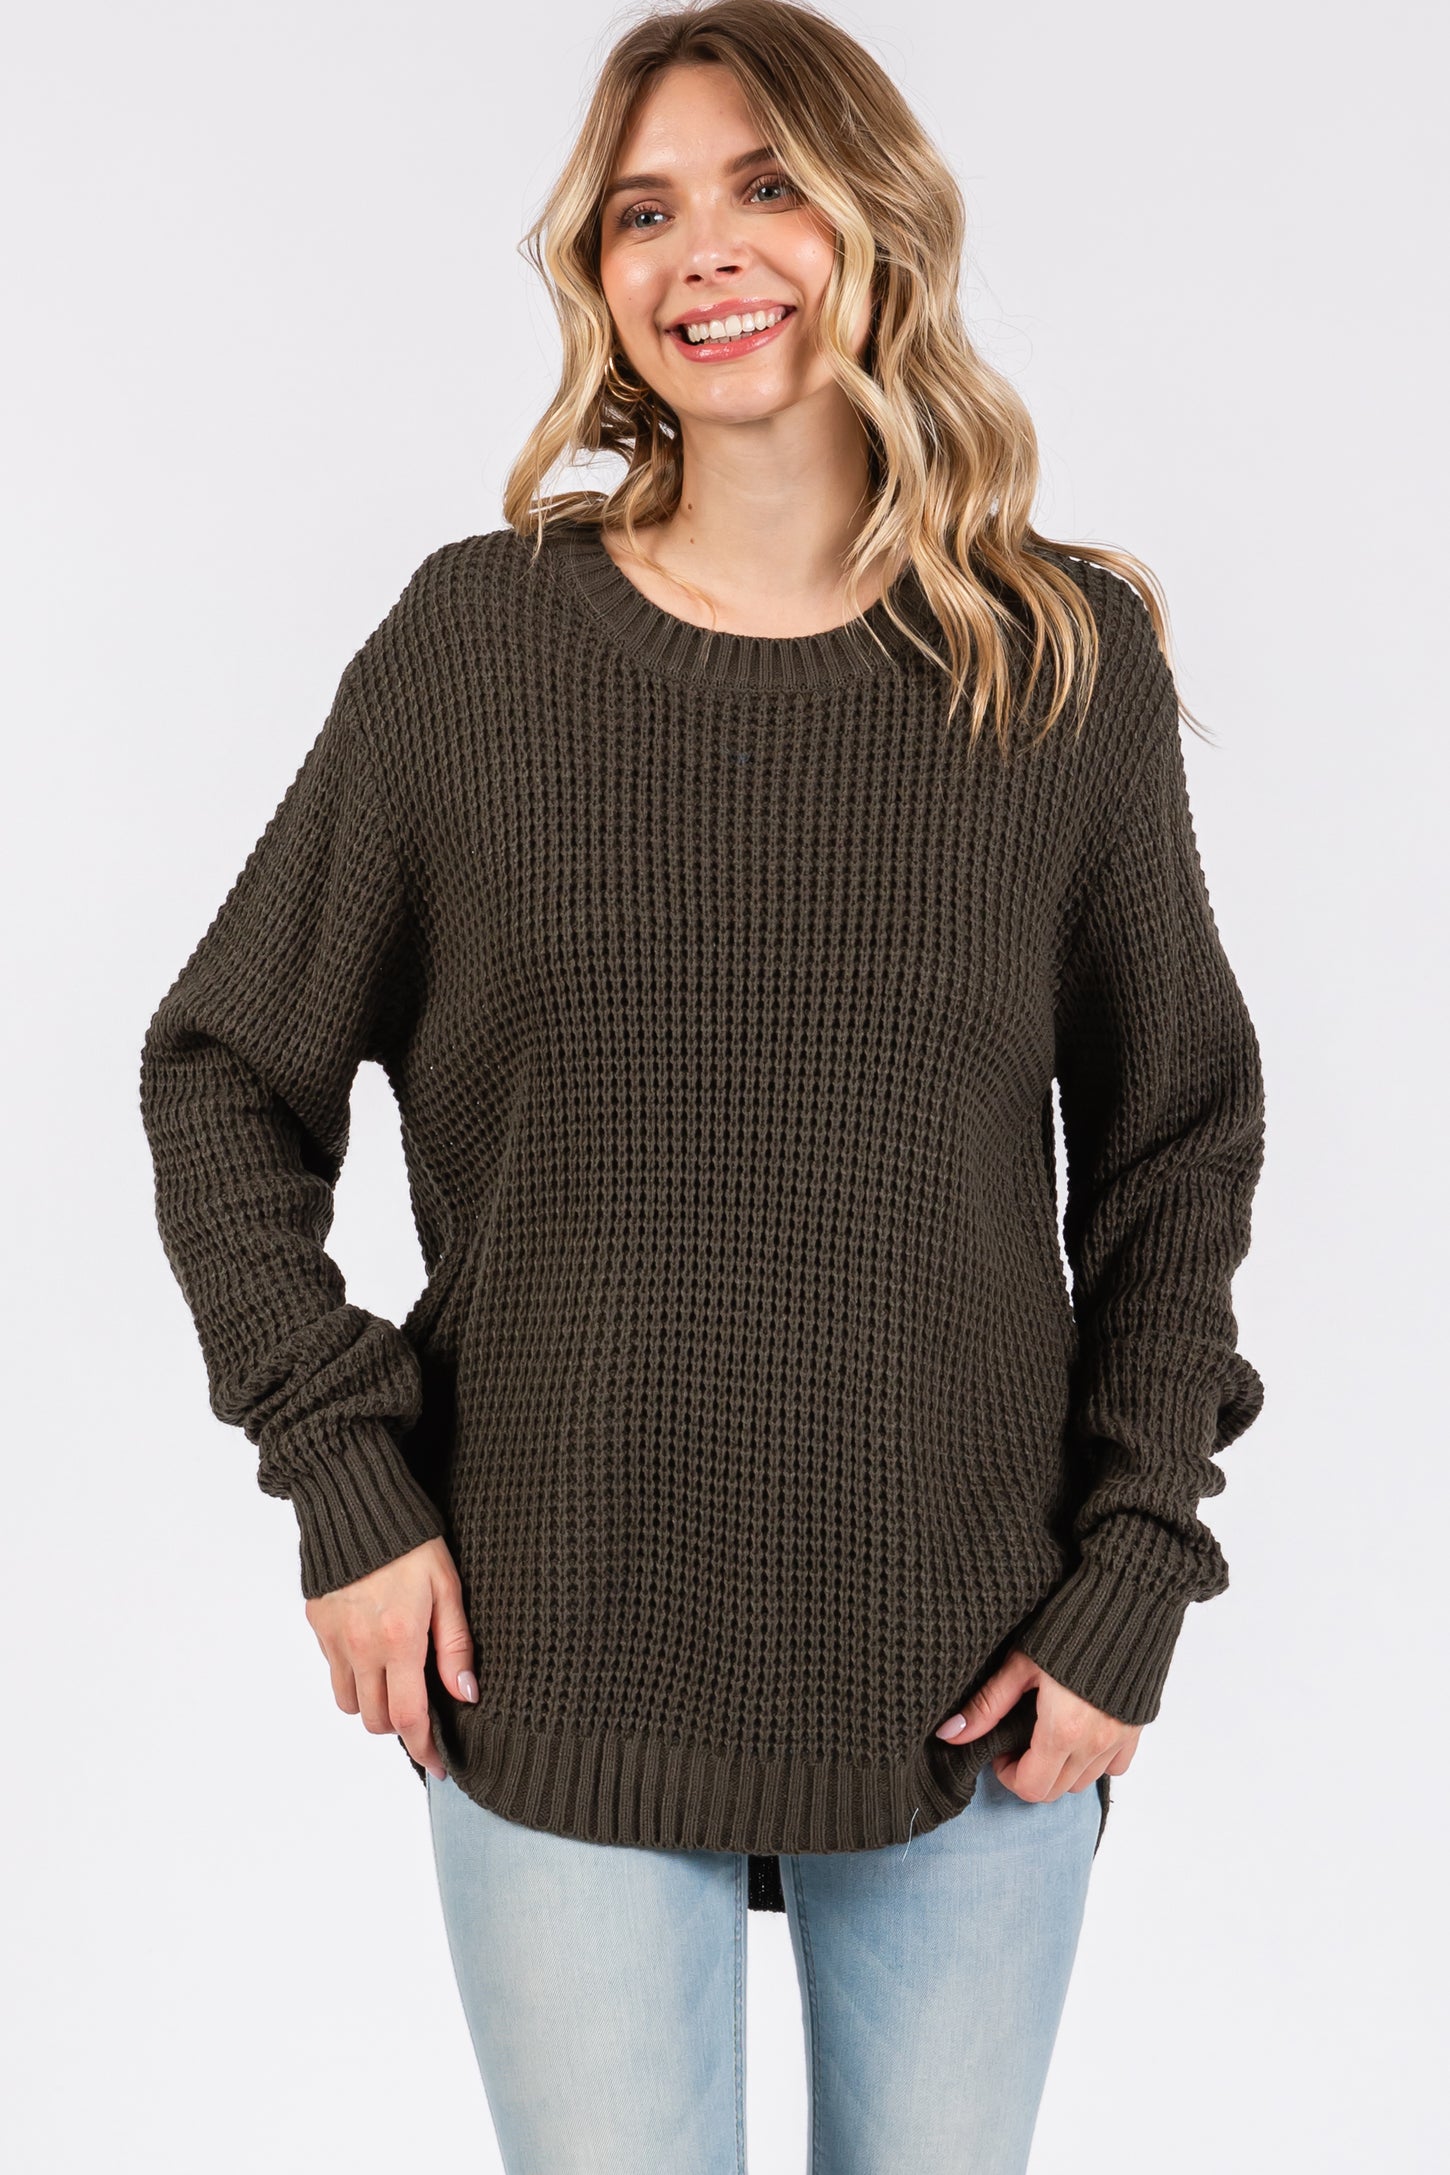 Waffle Knit Sweater - FINAL SALE